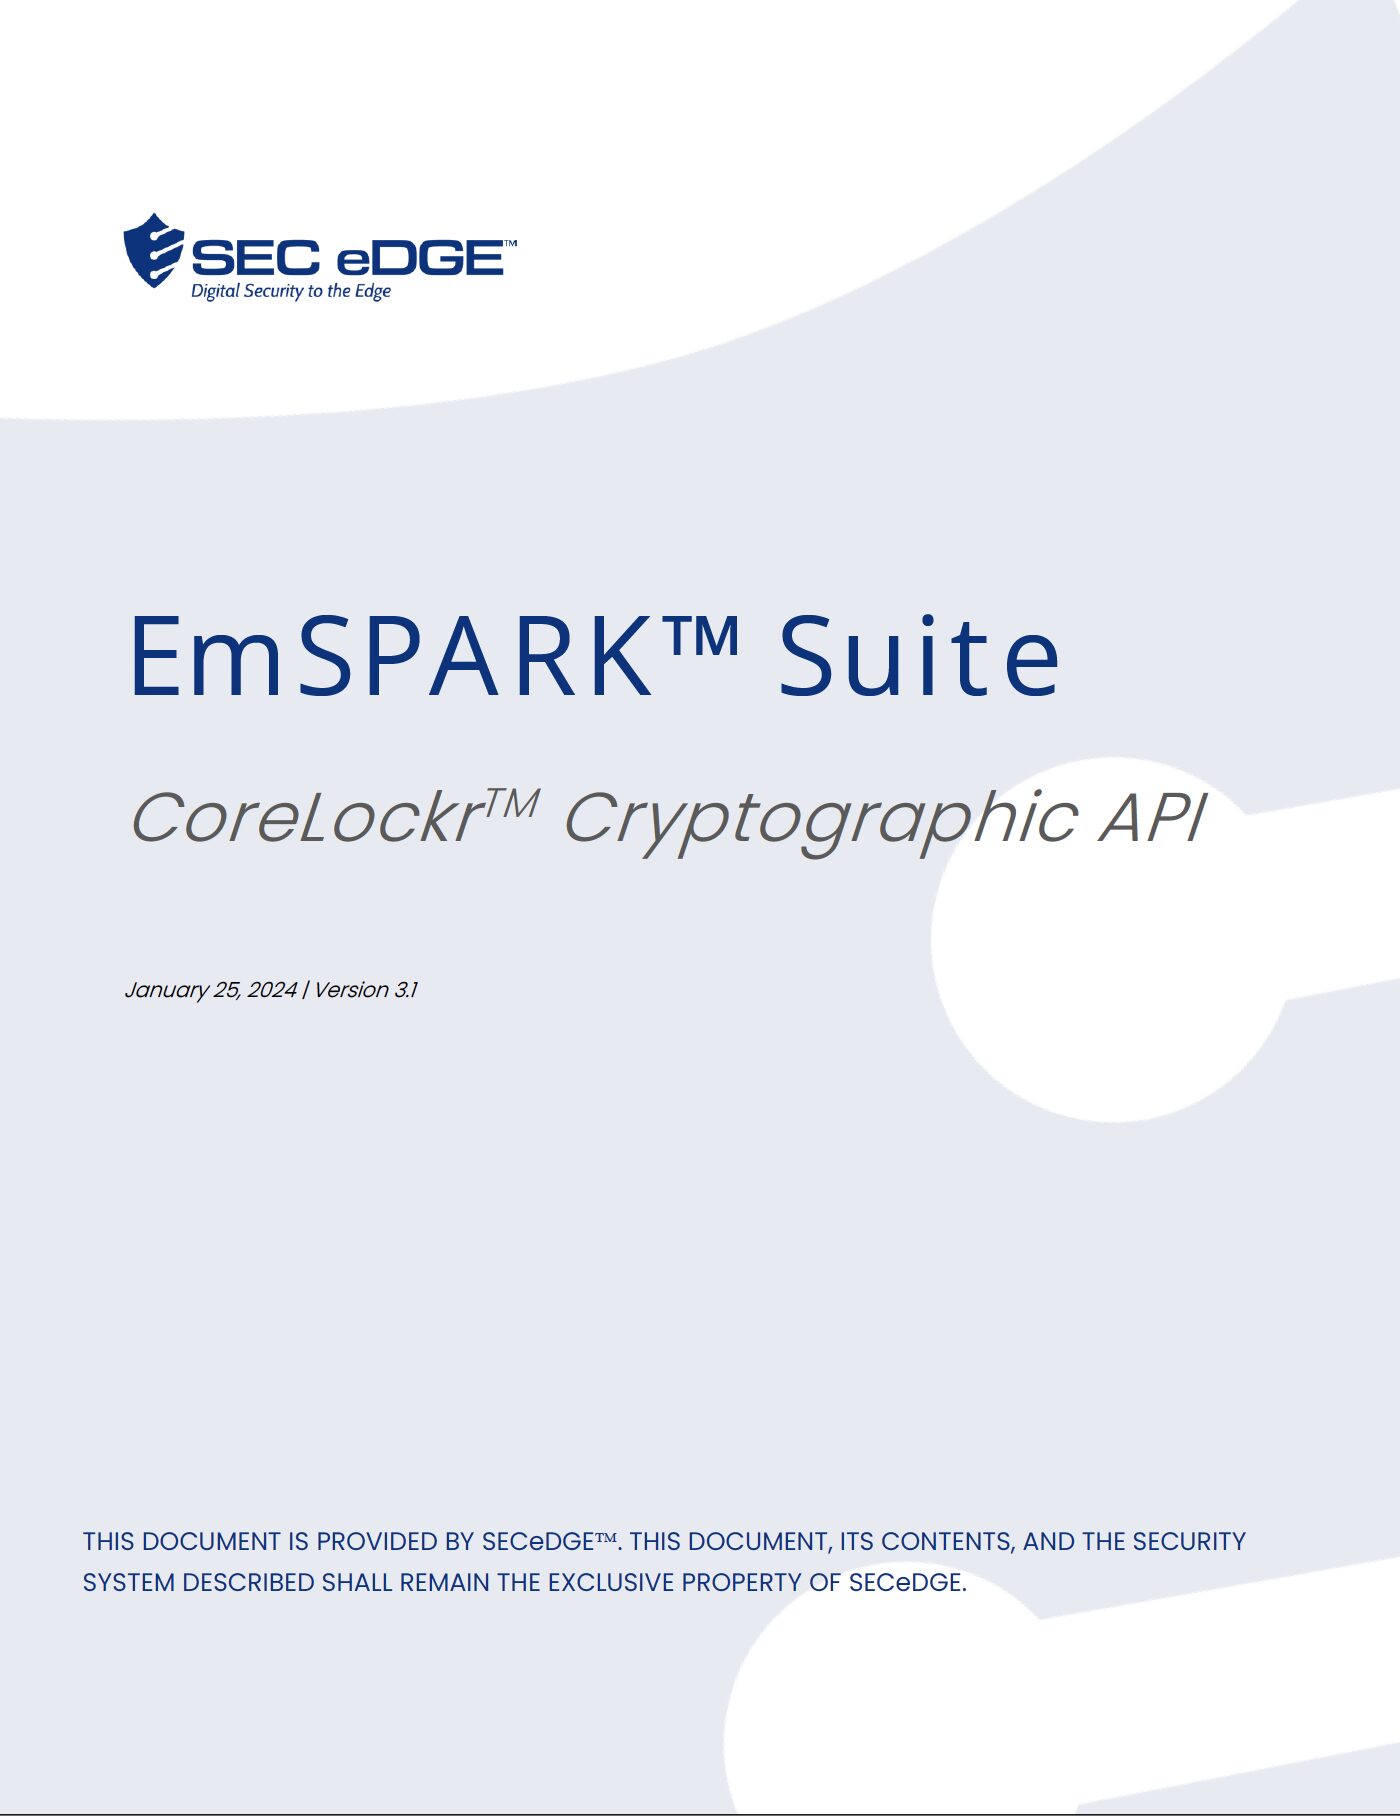 EmSPARK™ Security Suite CoreLockr™ Cryptographic API version 3.1